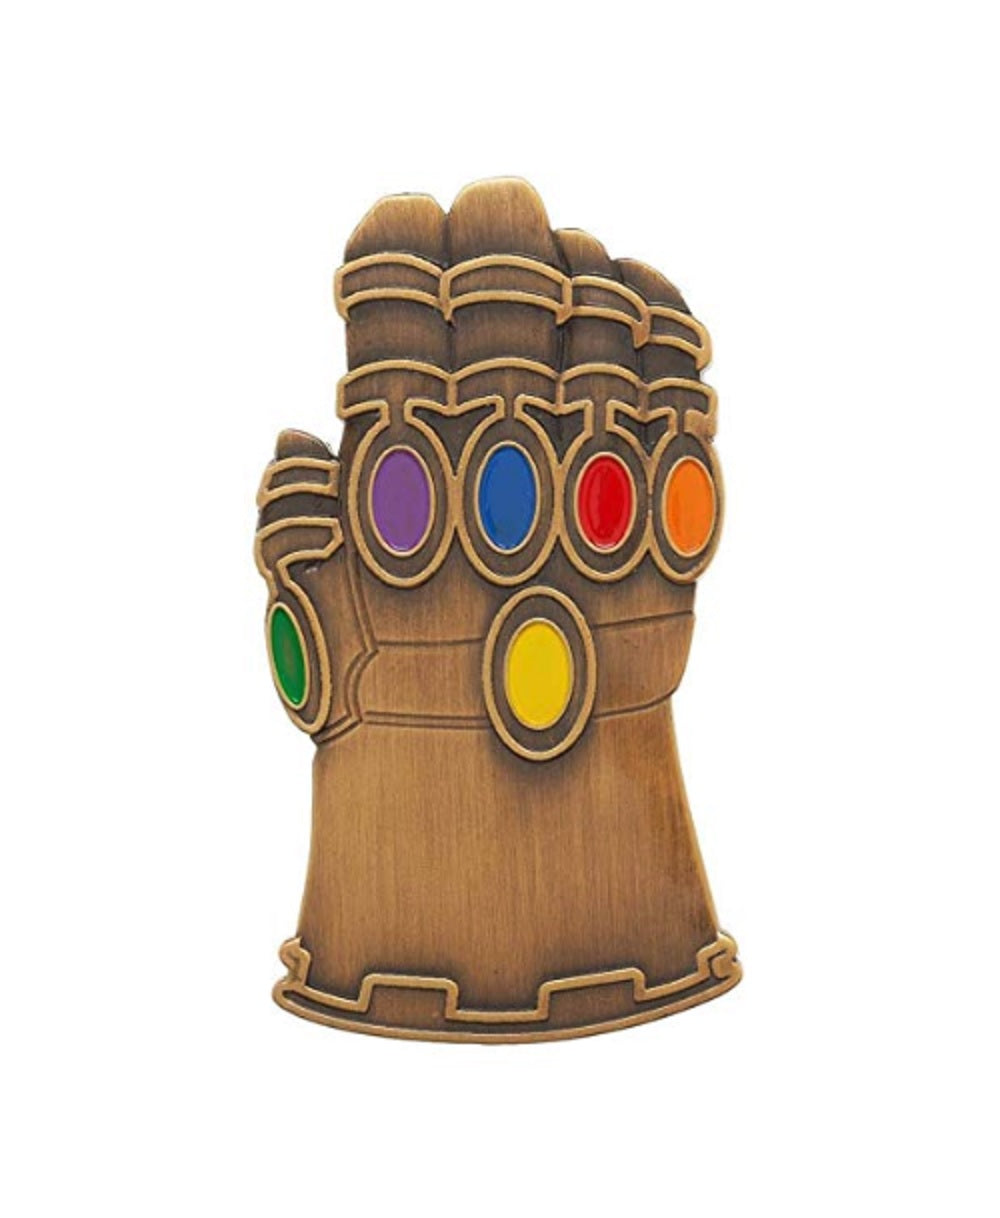 Avengers Endgame Thanos Infinity Gauntlet Marvel Comics Lapel Pin